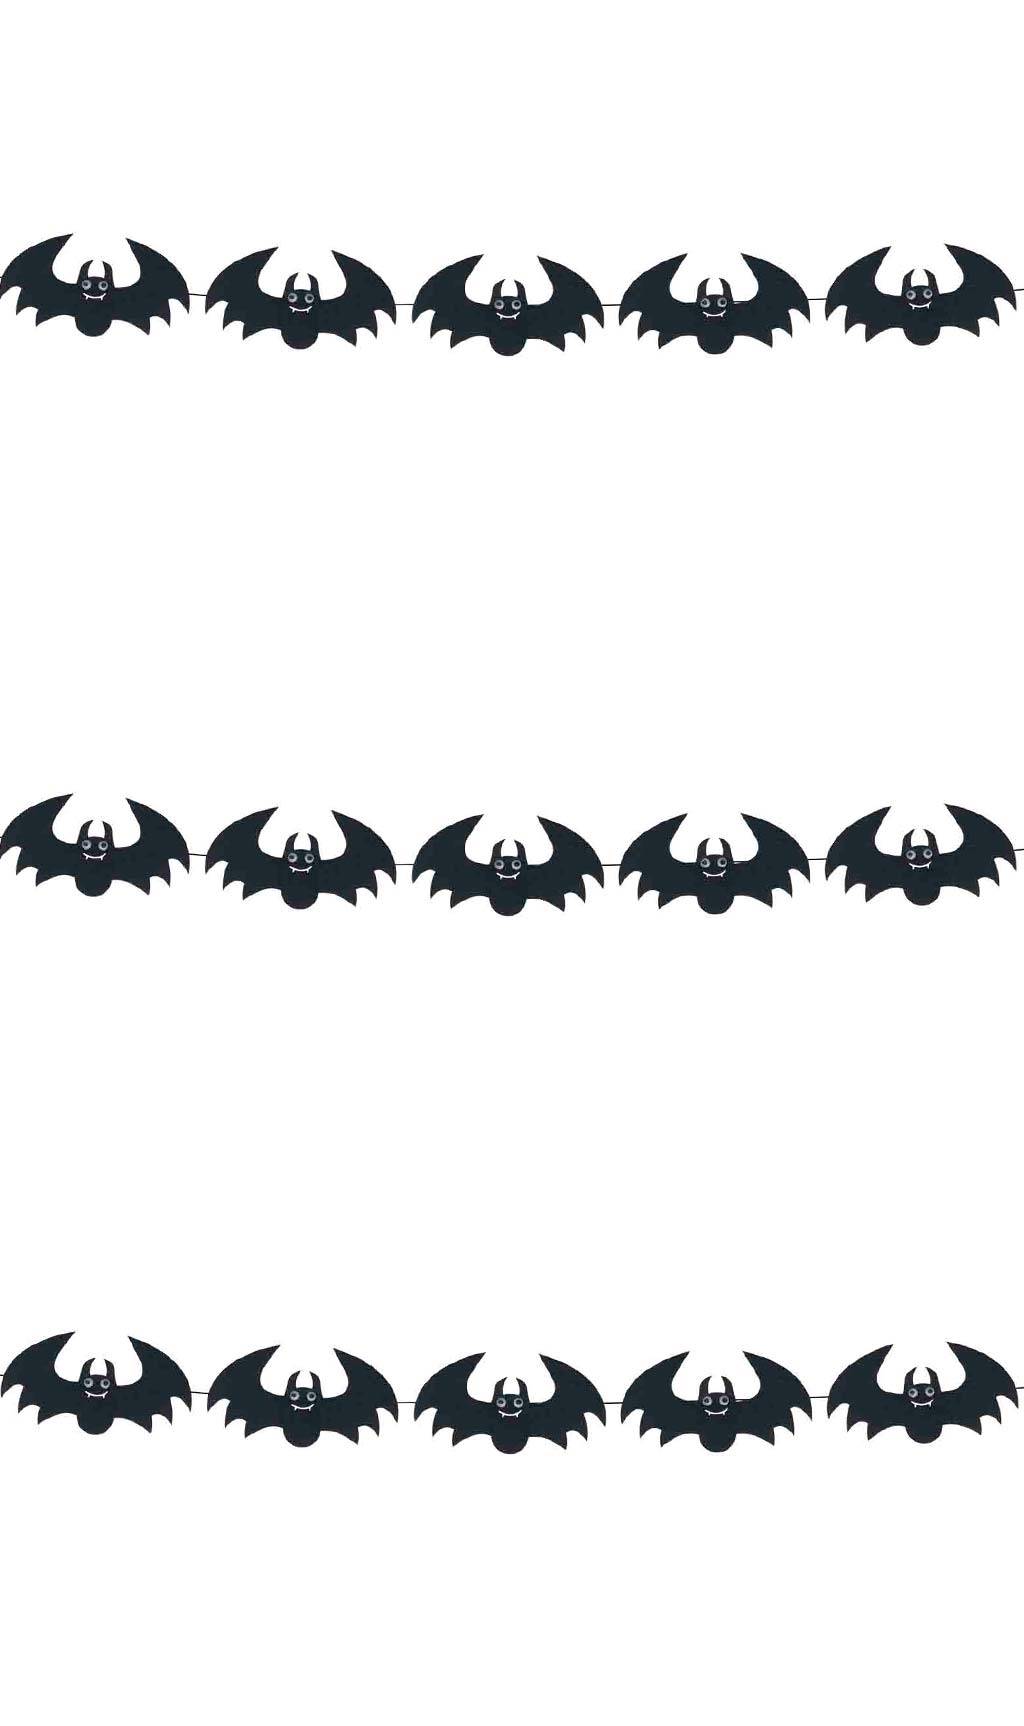 Grinalda de Morcegos em Feltro